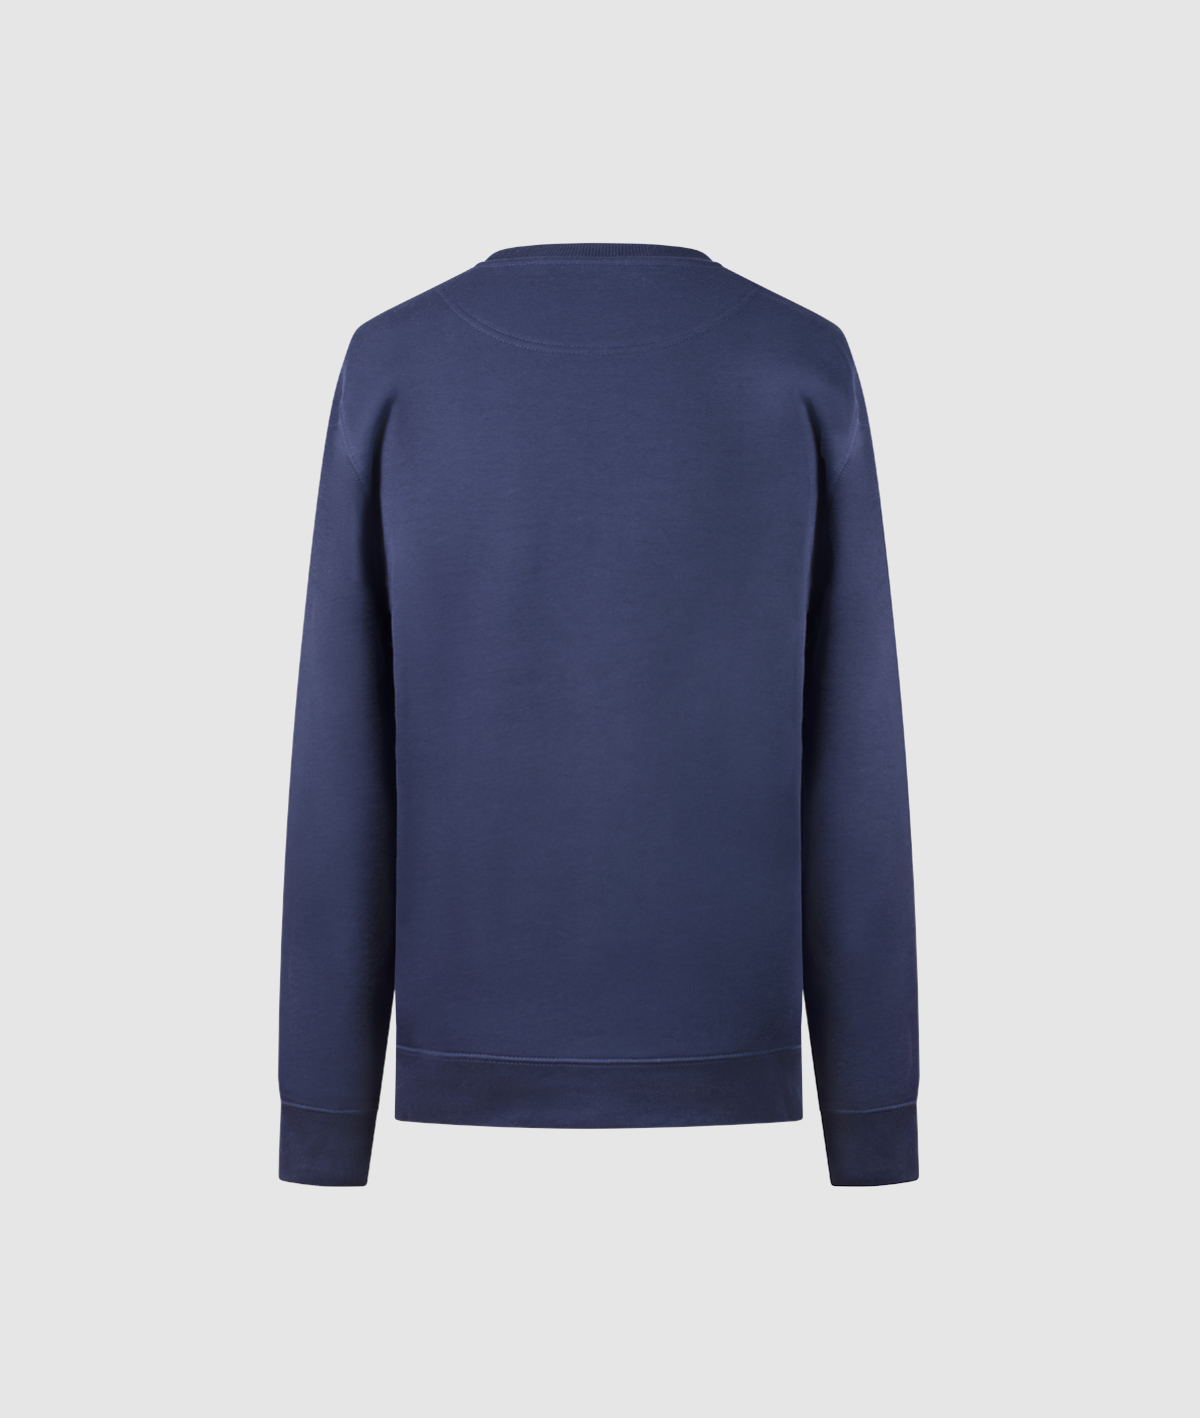 Changer SM IEU Sweatshirt. french navy colour back